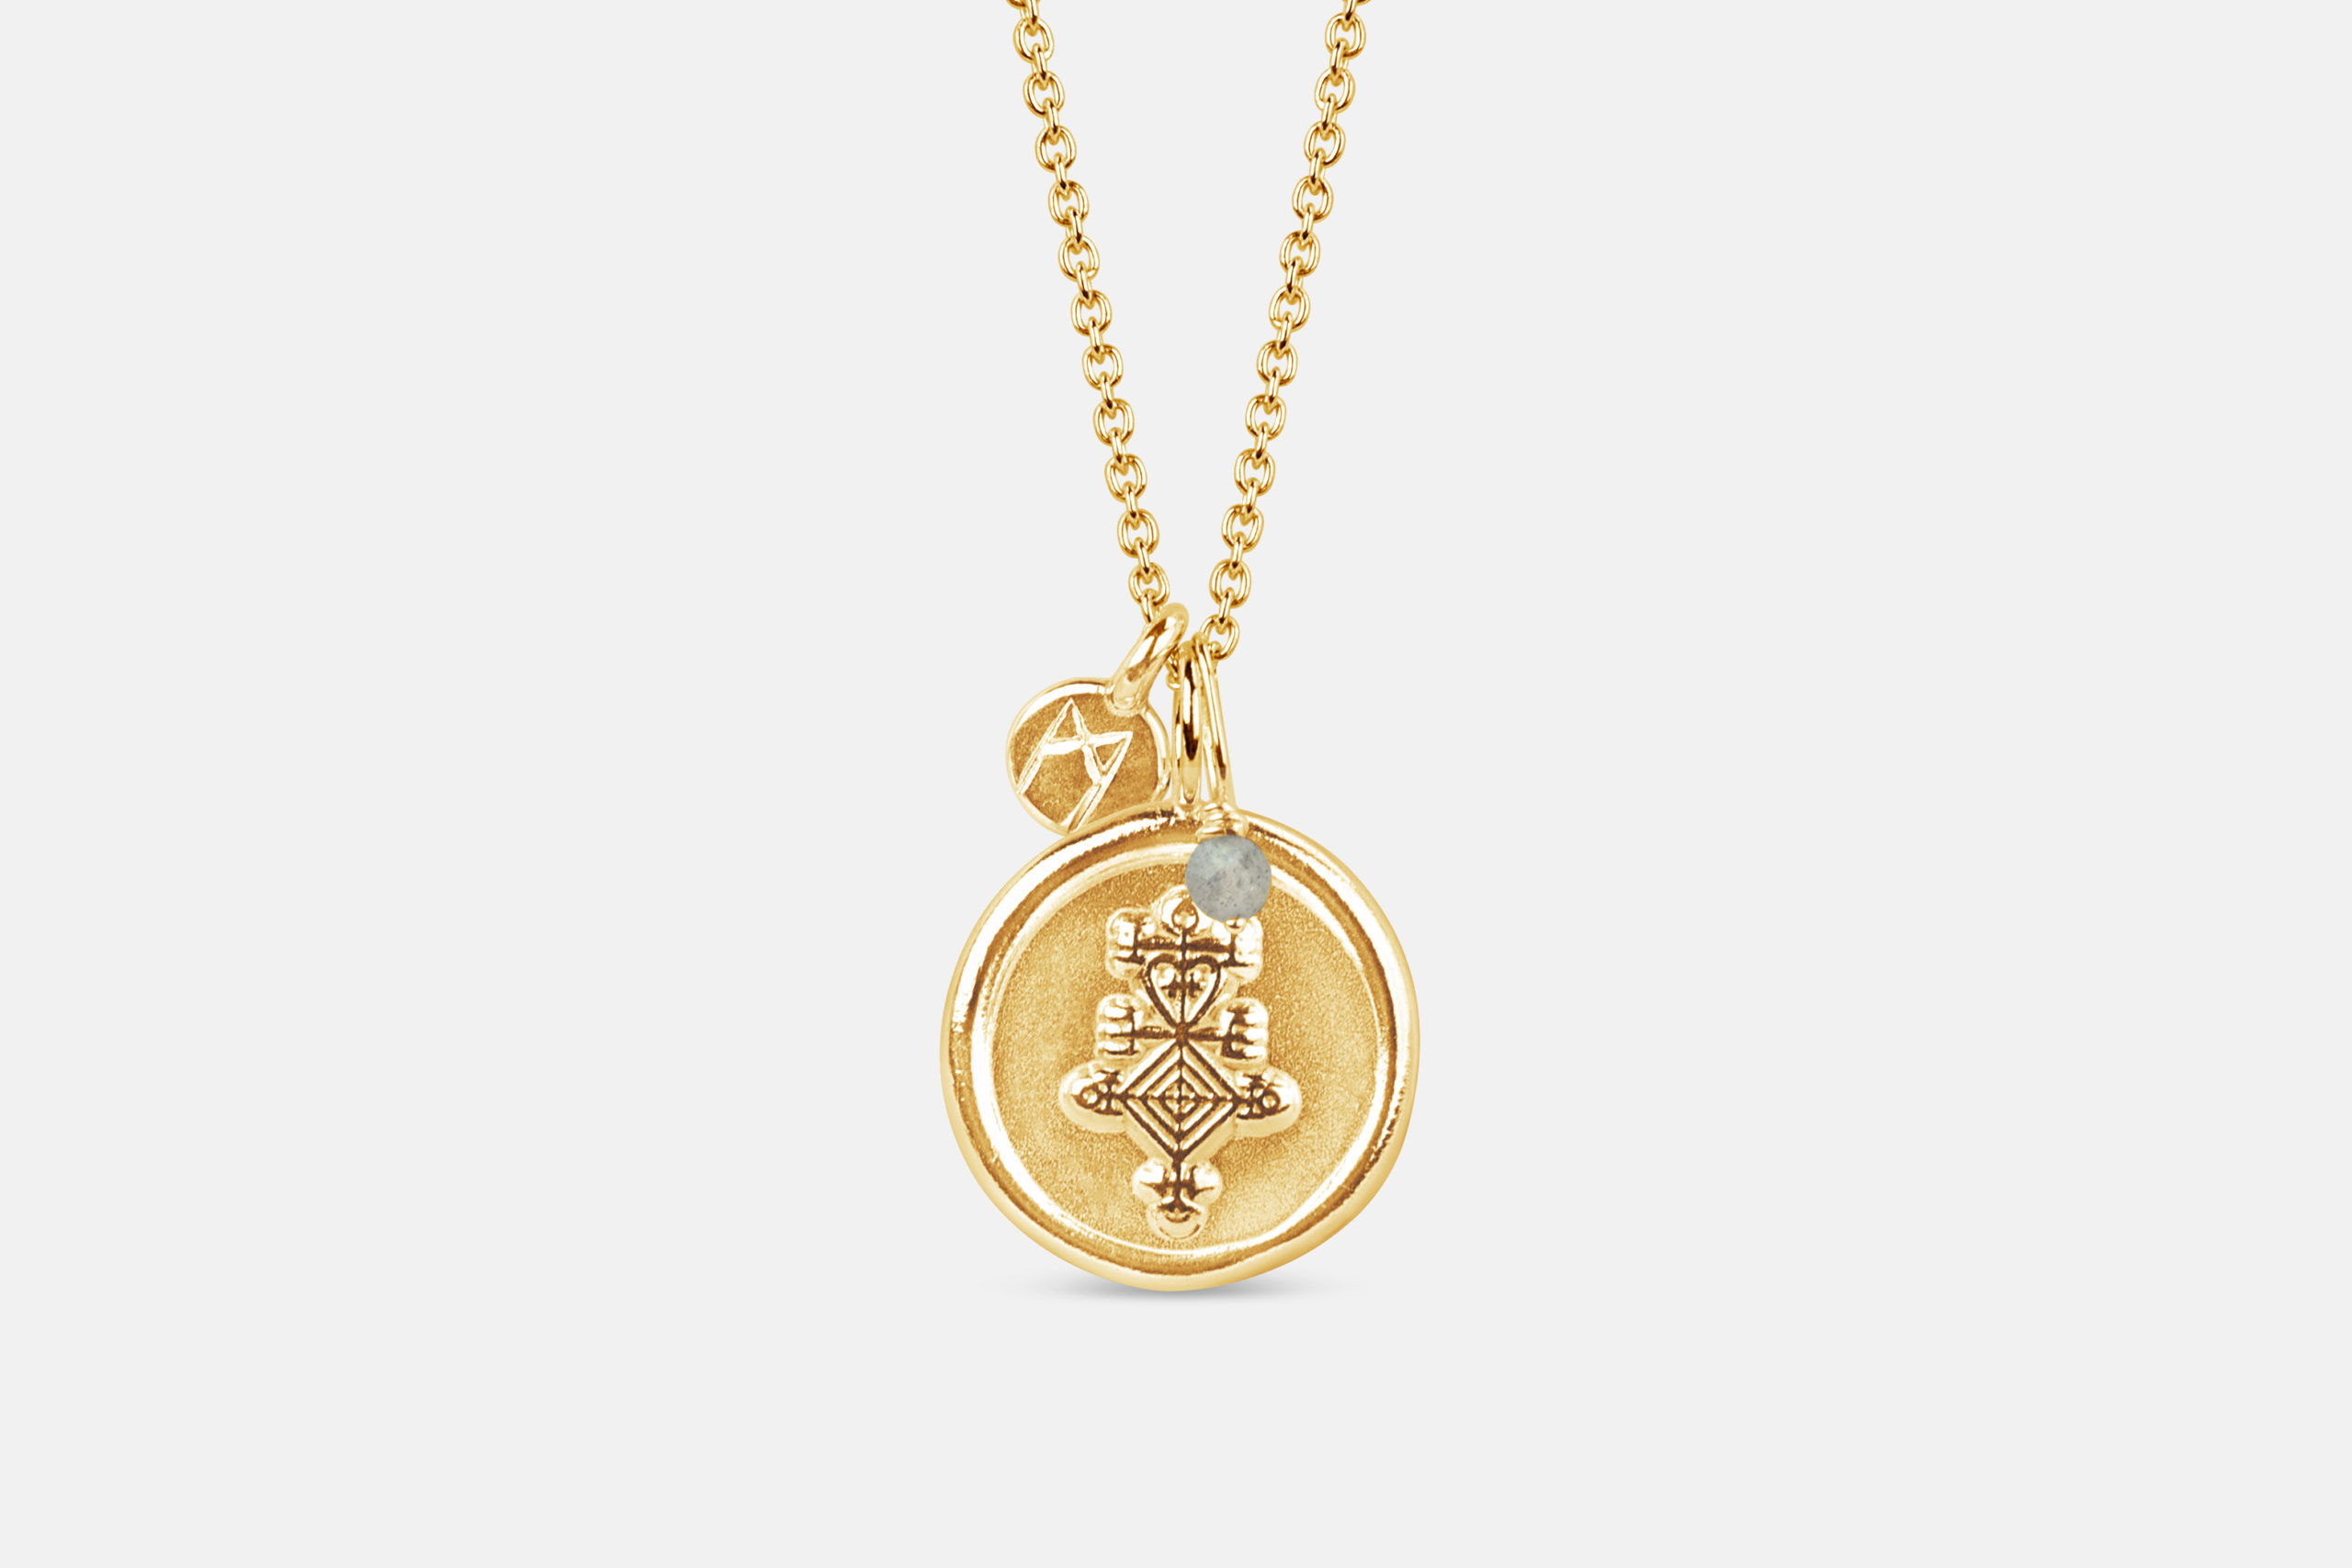 Astarstafur gold magic stave necklace with rune symbol